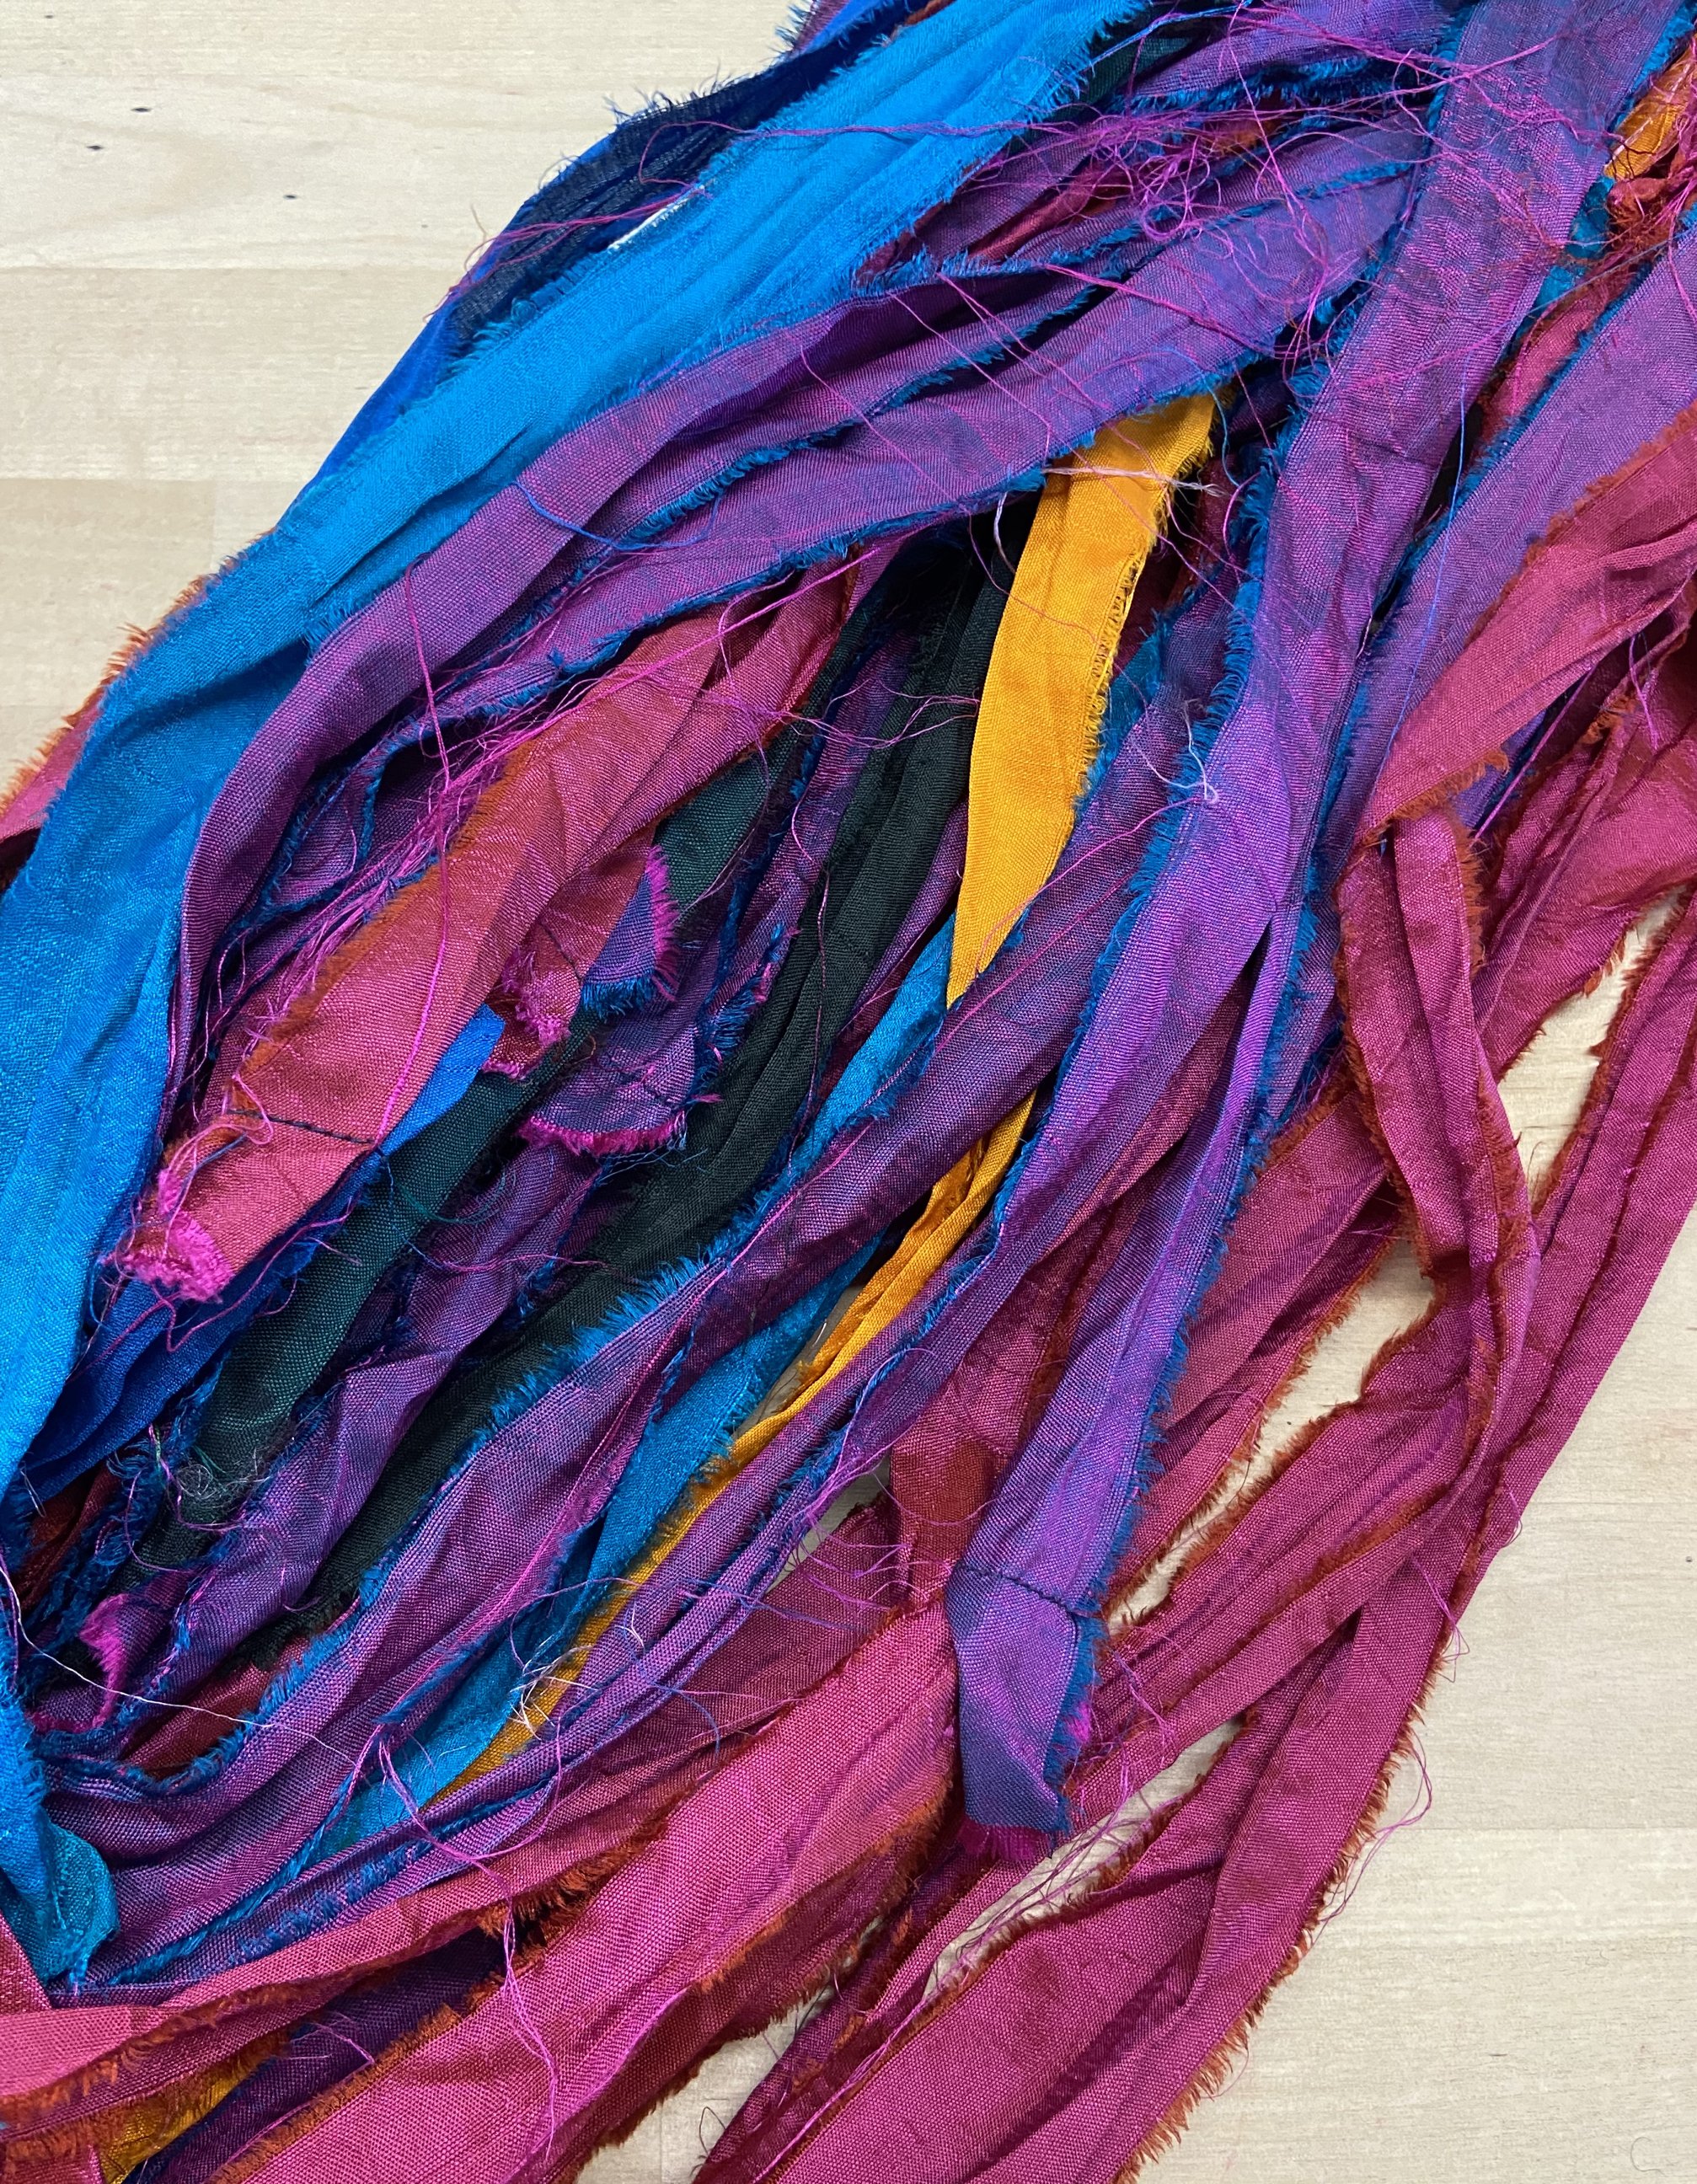 Yellow Sari Silk Ribbon Strips Recycled Sari Silk Ribbon Strips for Tassels  Shades of Yellow & Gold Sari Silk Printed Ribbon 